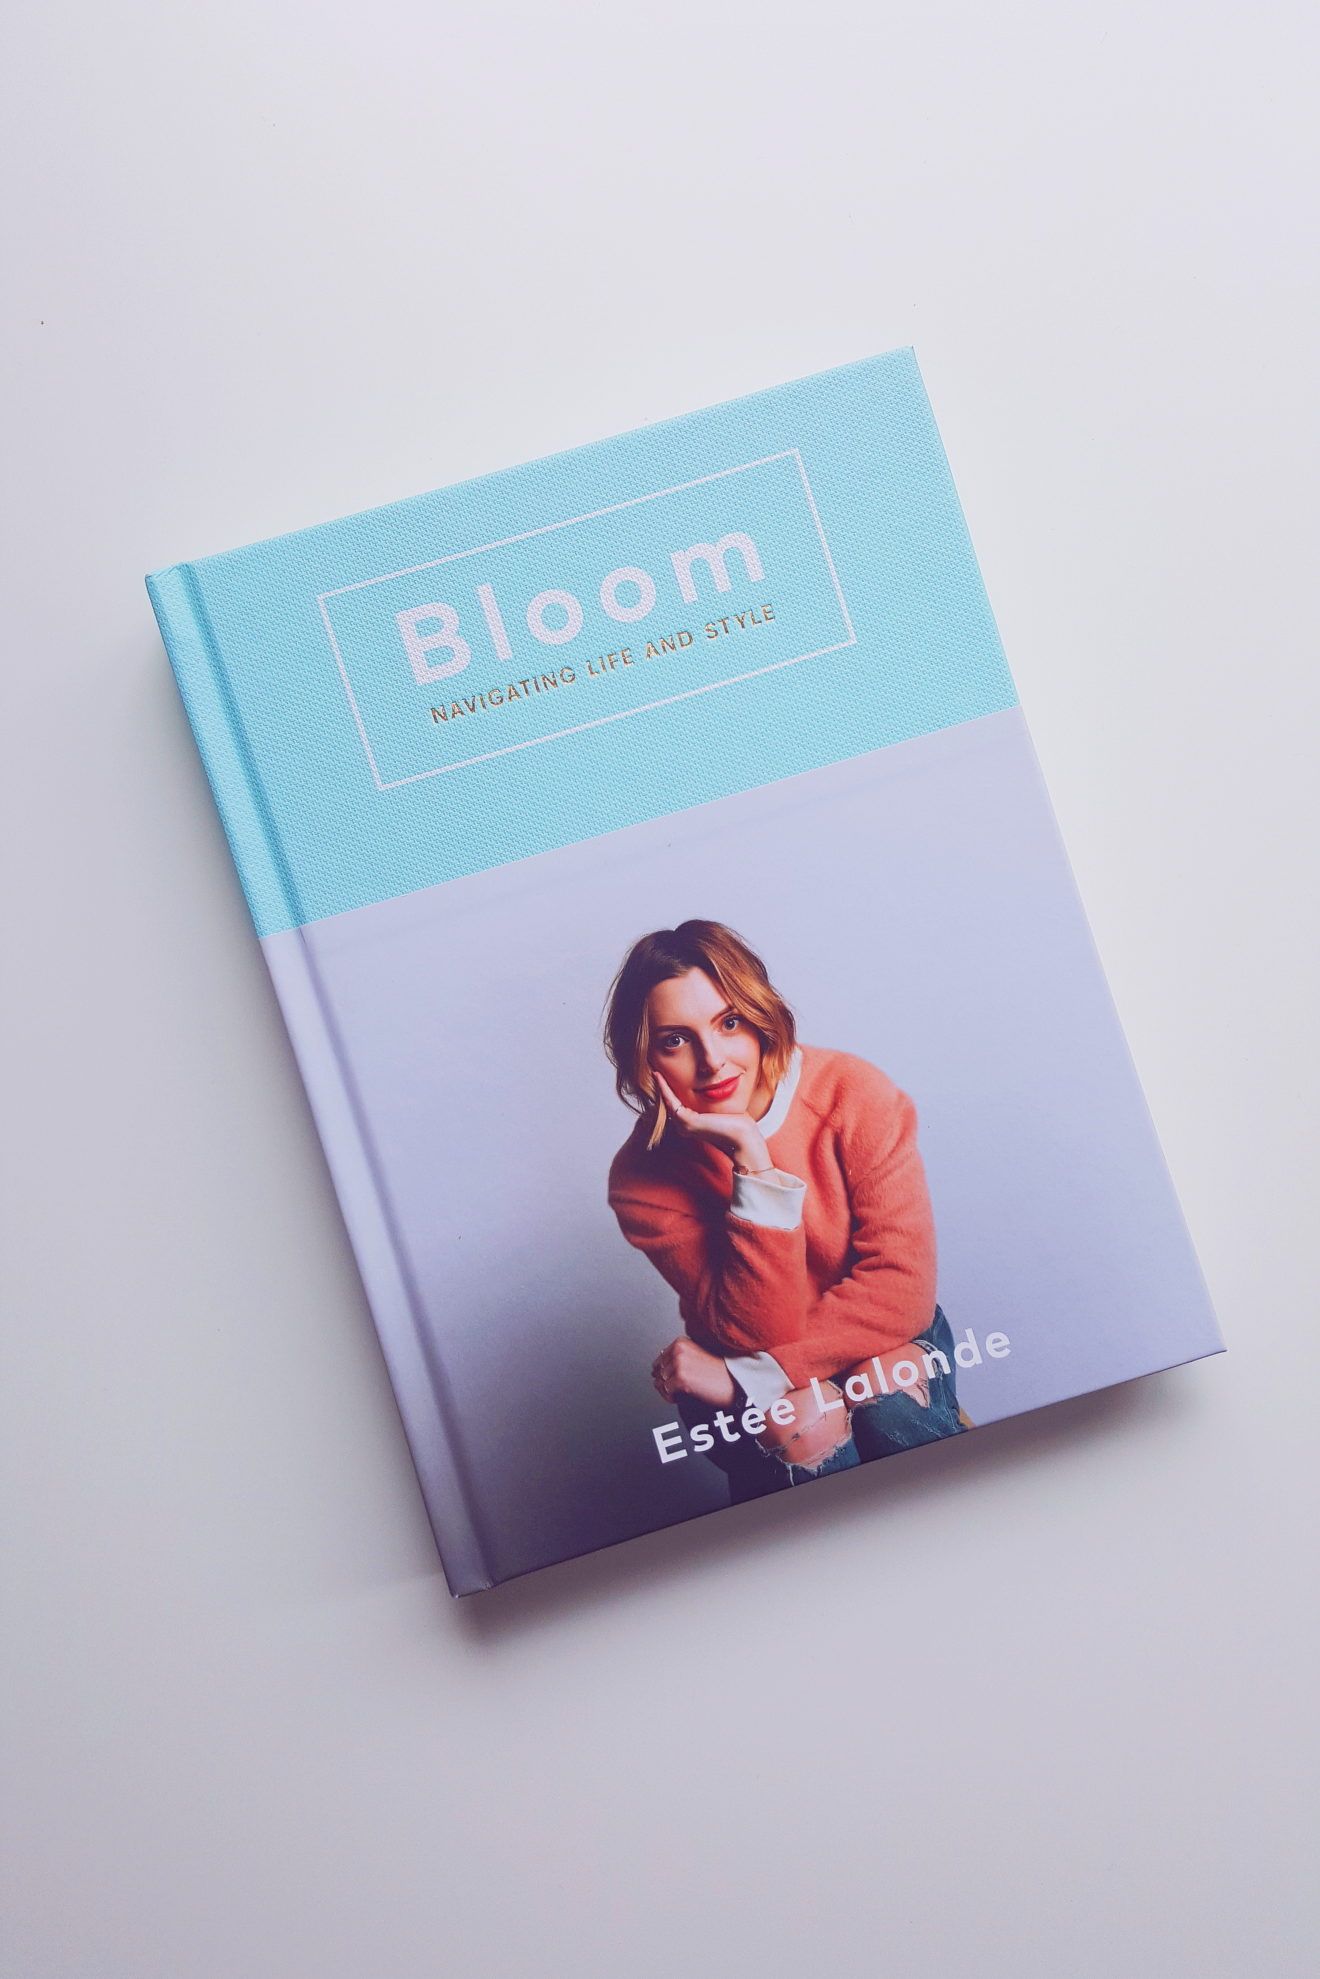 Bloom, navigating life and style, estee lalonde, recenzie deboratentis.ro